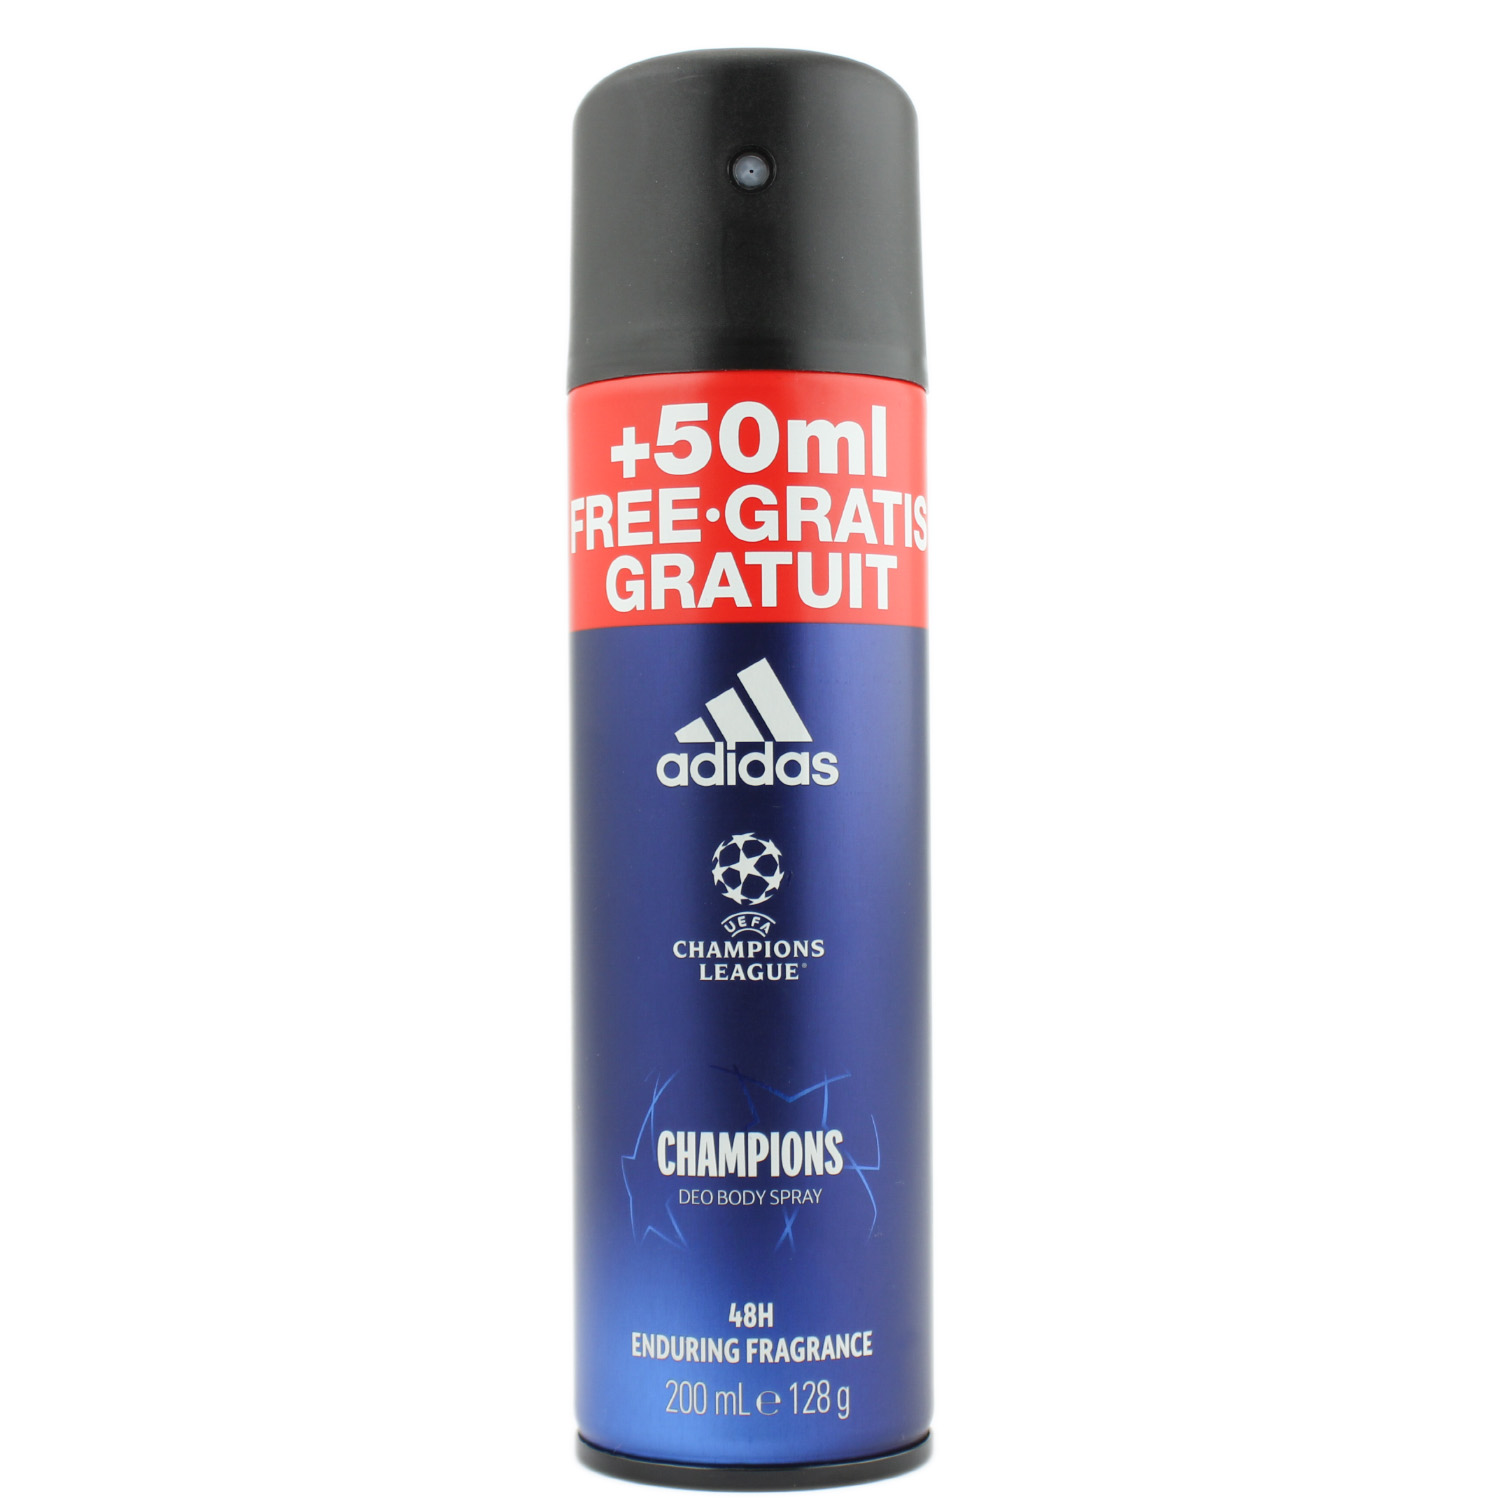 Adidas UEFA Champions League Champions 48H Deodorant Body Spray 150ml + 50ml GRATIS